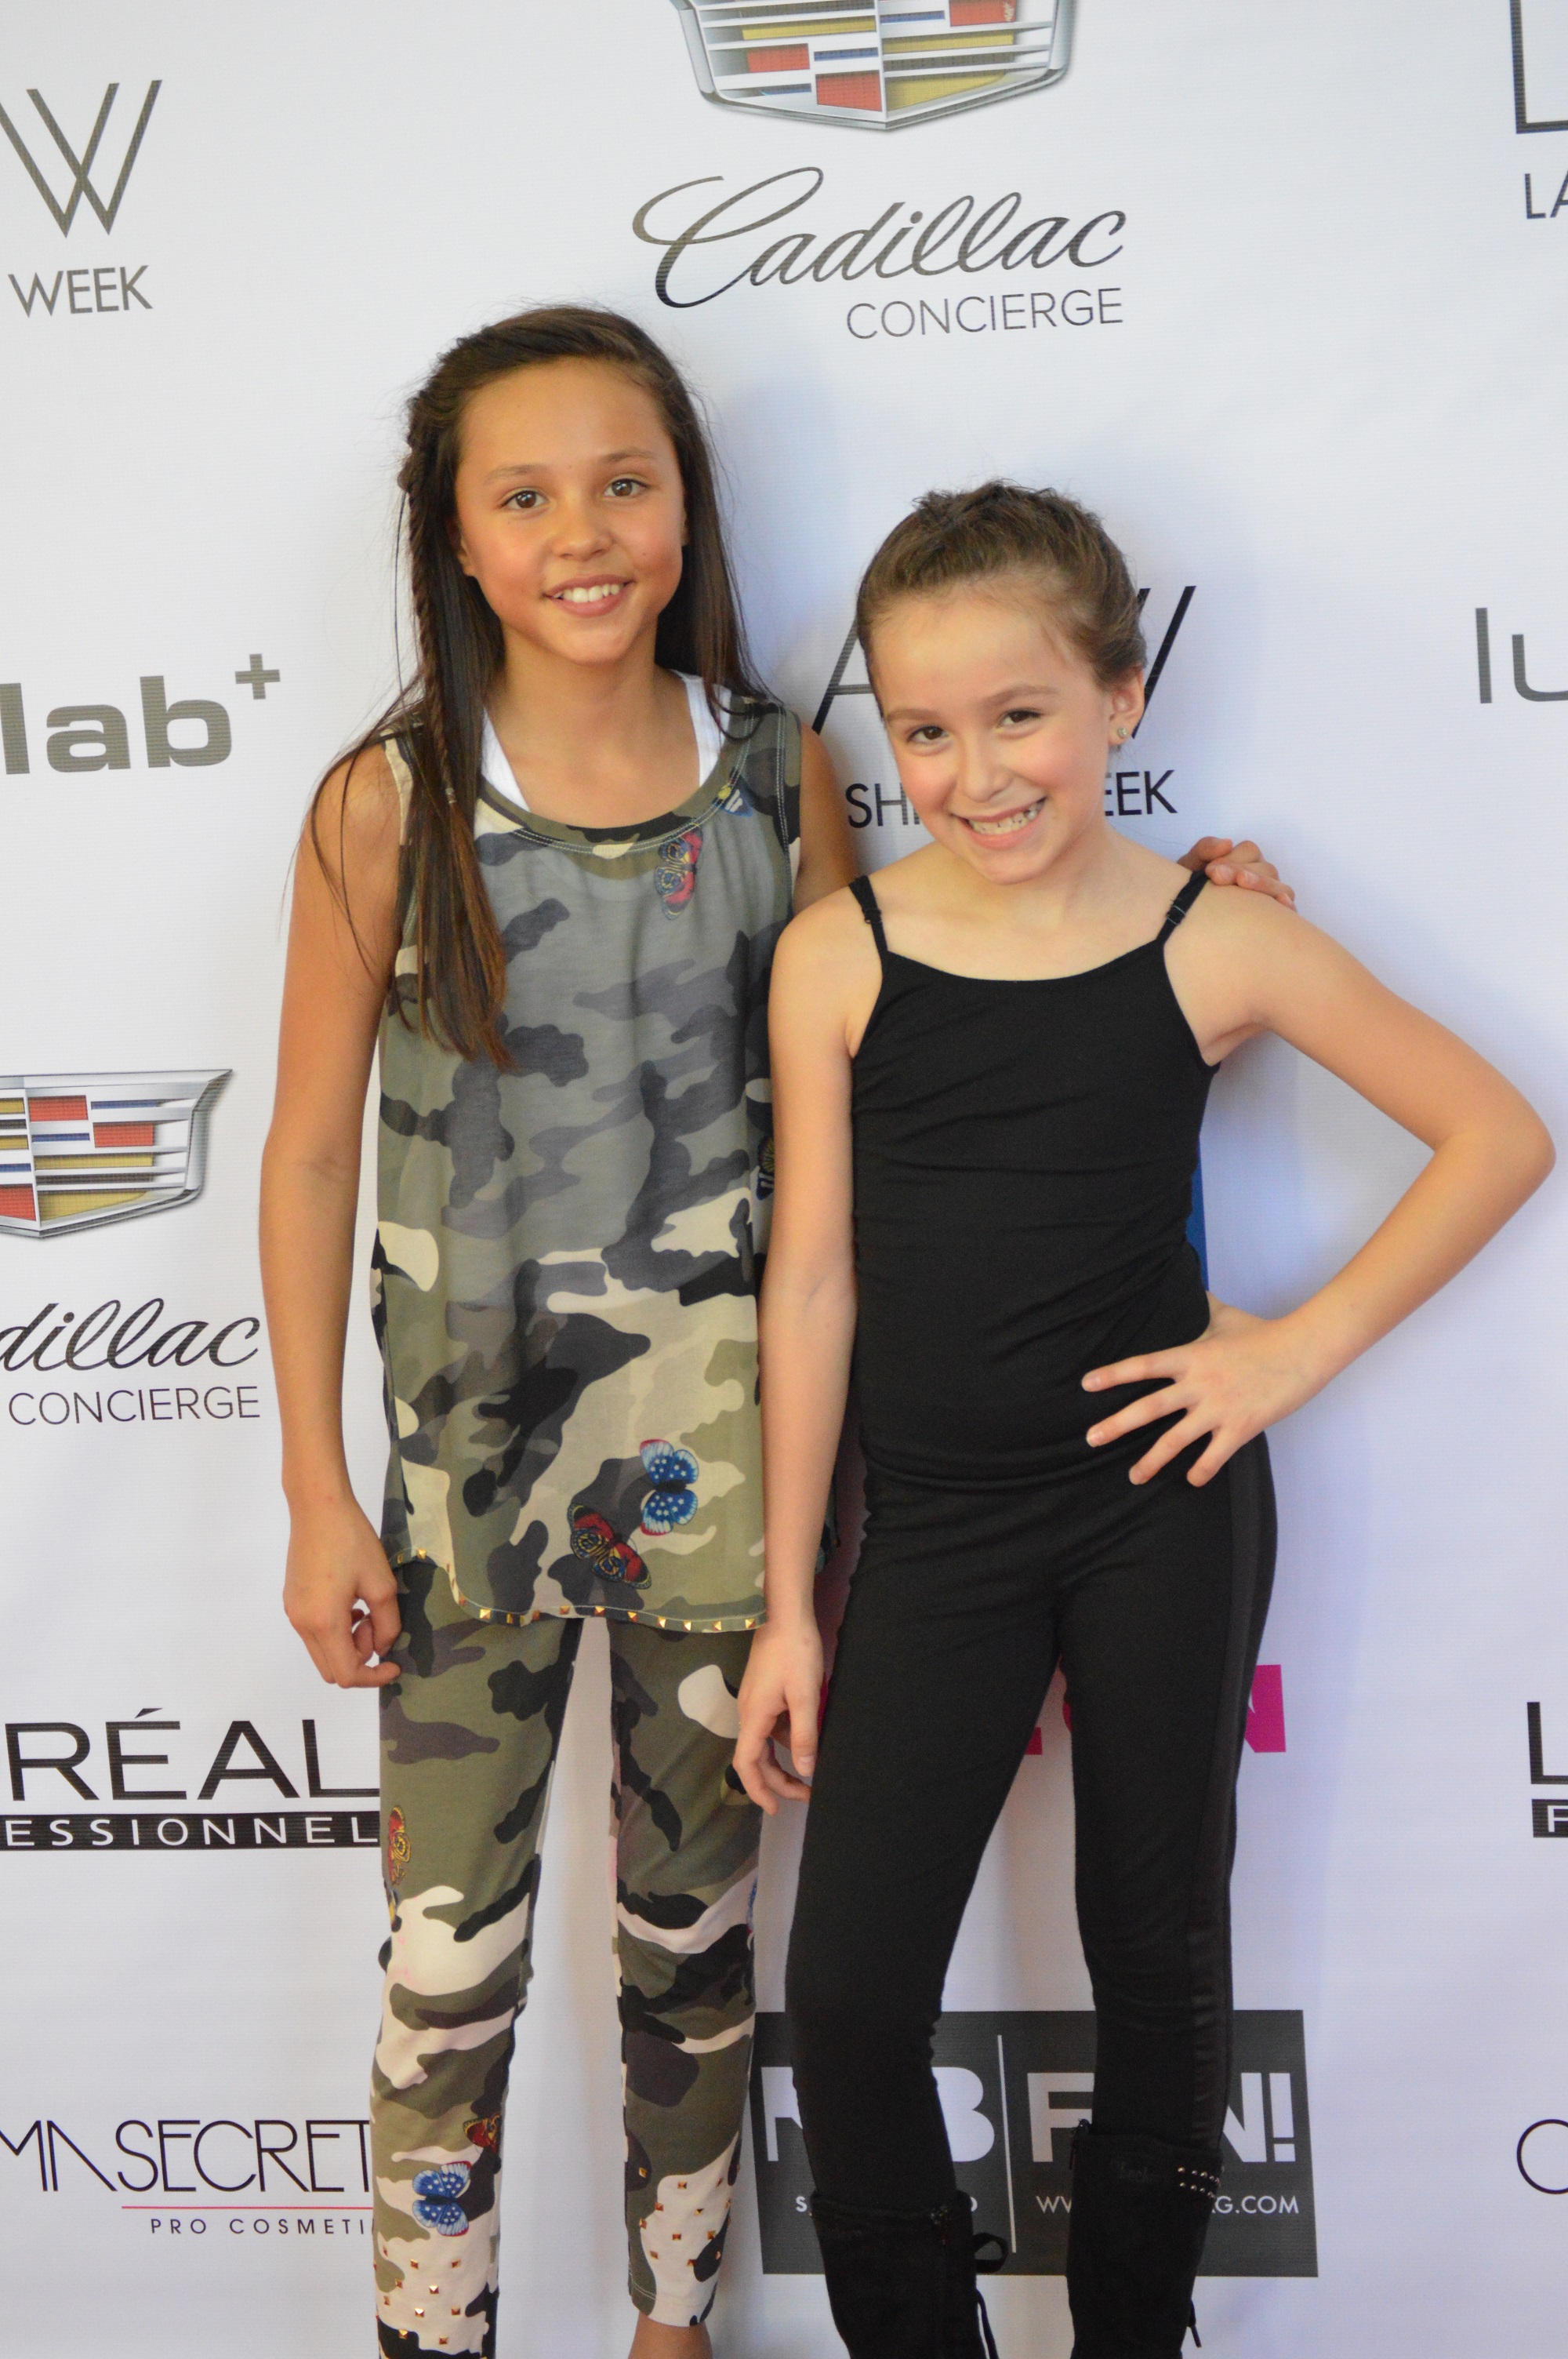 Azalia Cortez and Breanna Yde At LA Fashion Week